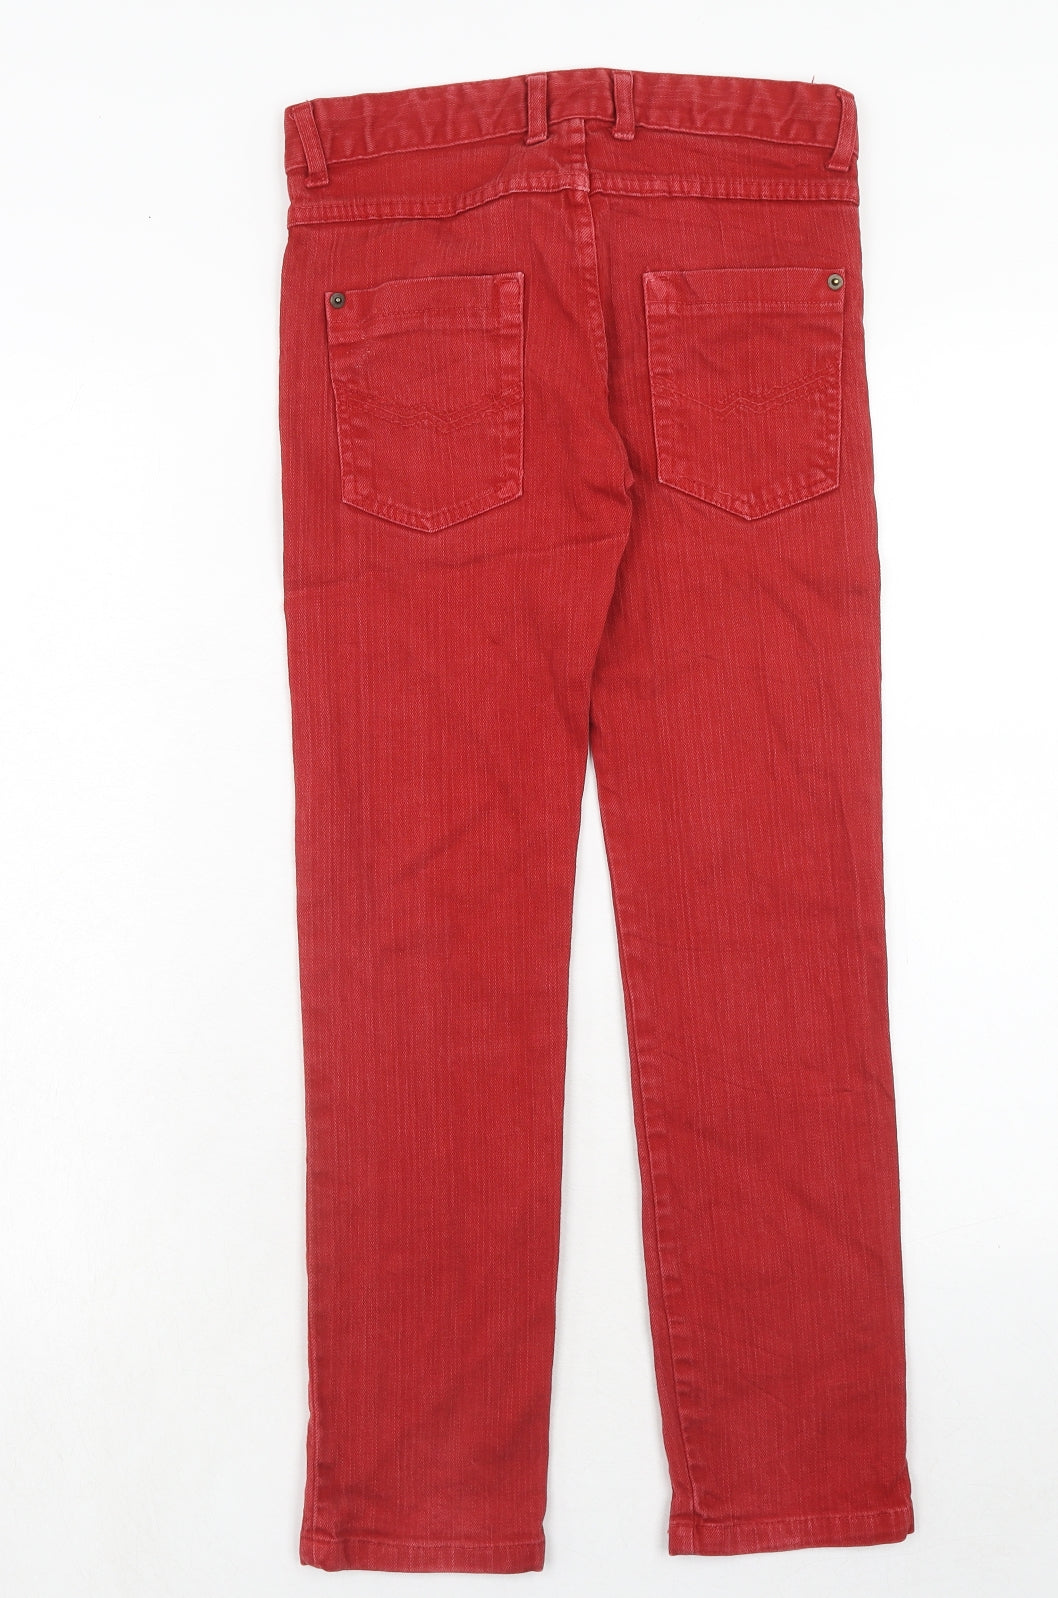 Zara Girls Red Cotton Skinny Jeans Size 9-10 Years Regular Zip